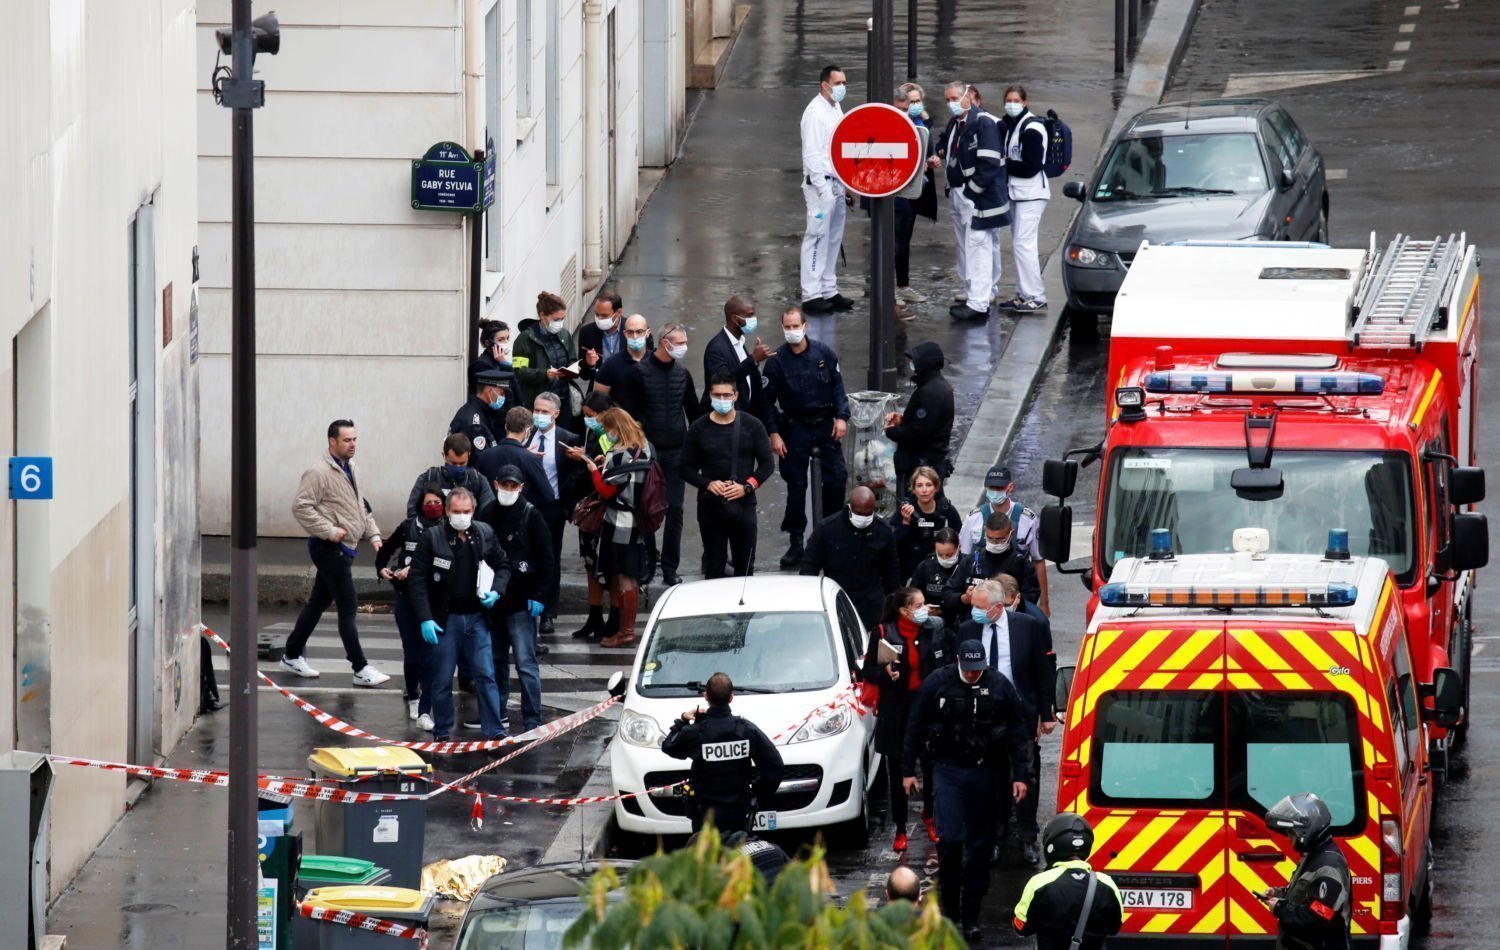 Нападение на теракт. Шарли Эбдо теракт в Париже. Теракт в Париже 13 ноября 2015. Террористический акт в редакции Charlie Hebdo в Париже 7 января 2015 года.